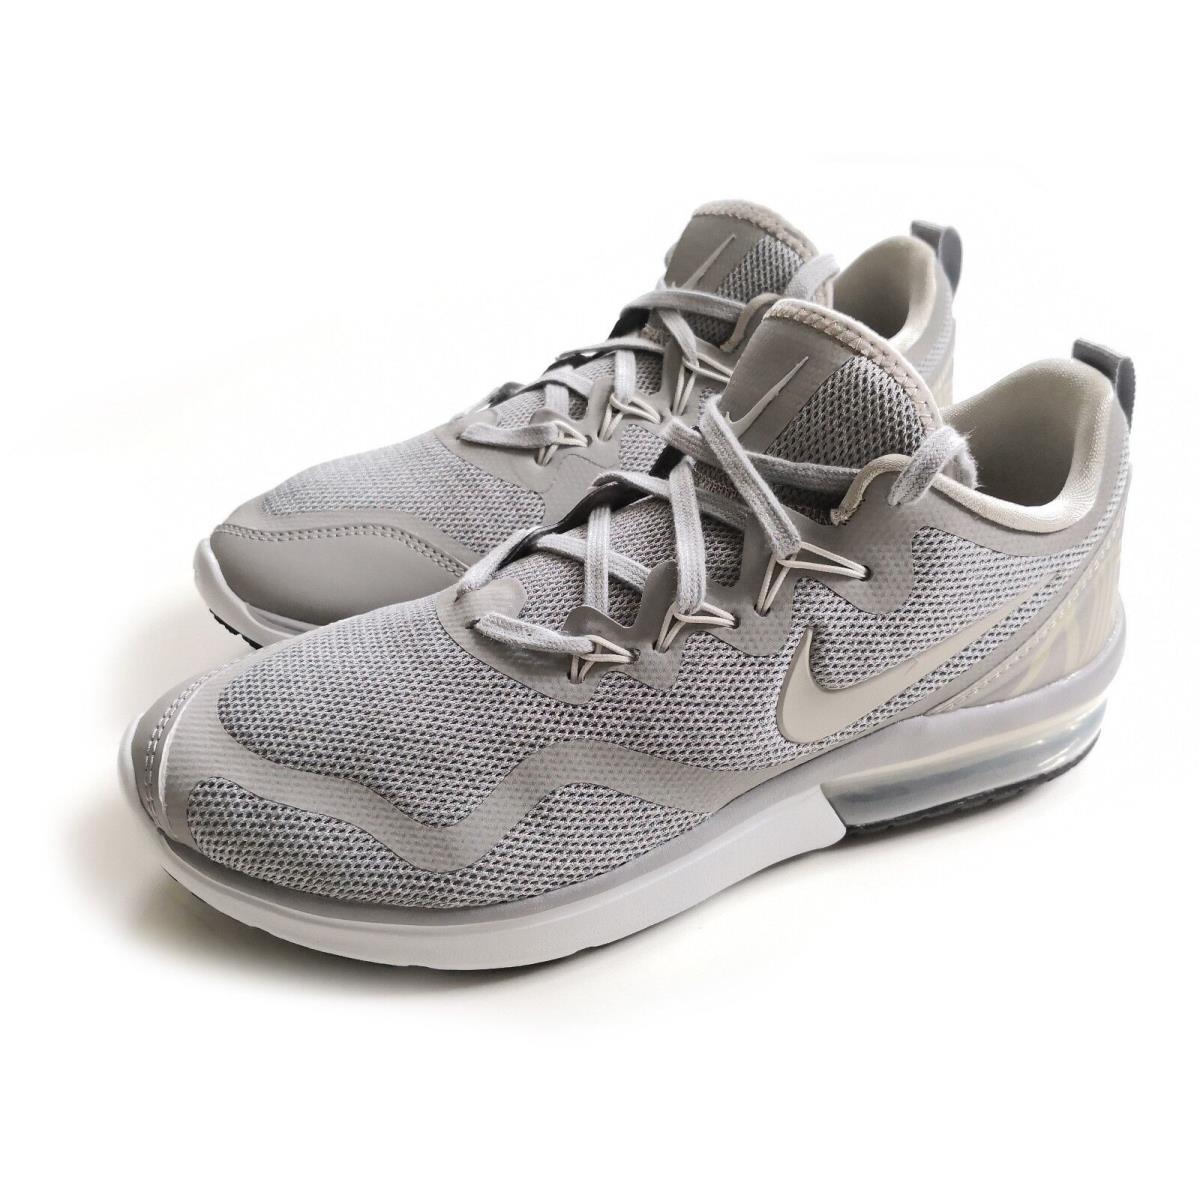 Nike Air Max Fury Running Shoes Women`s Size 7 Grey AA5740 003 - Gray